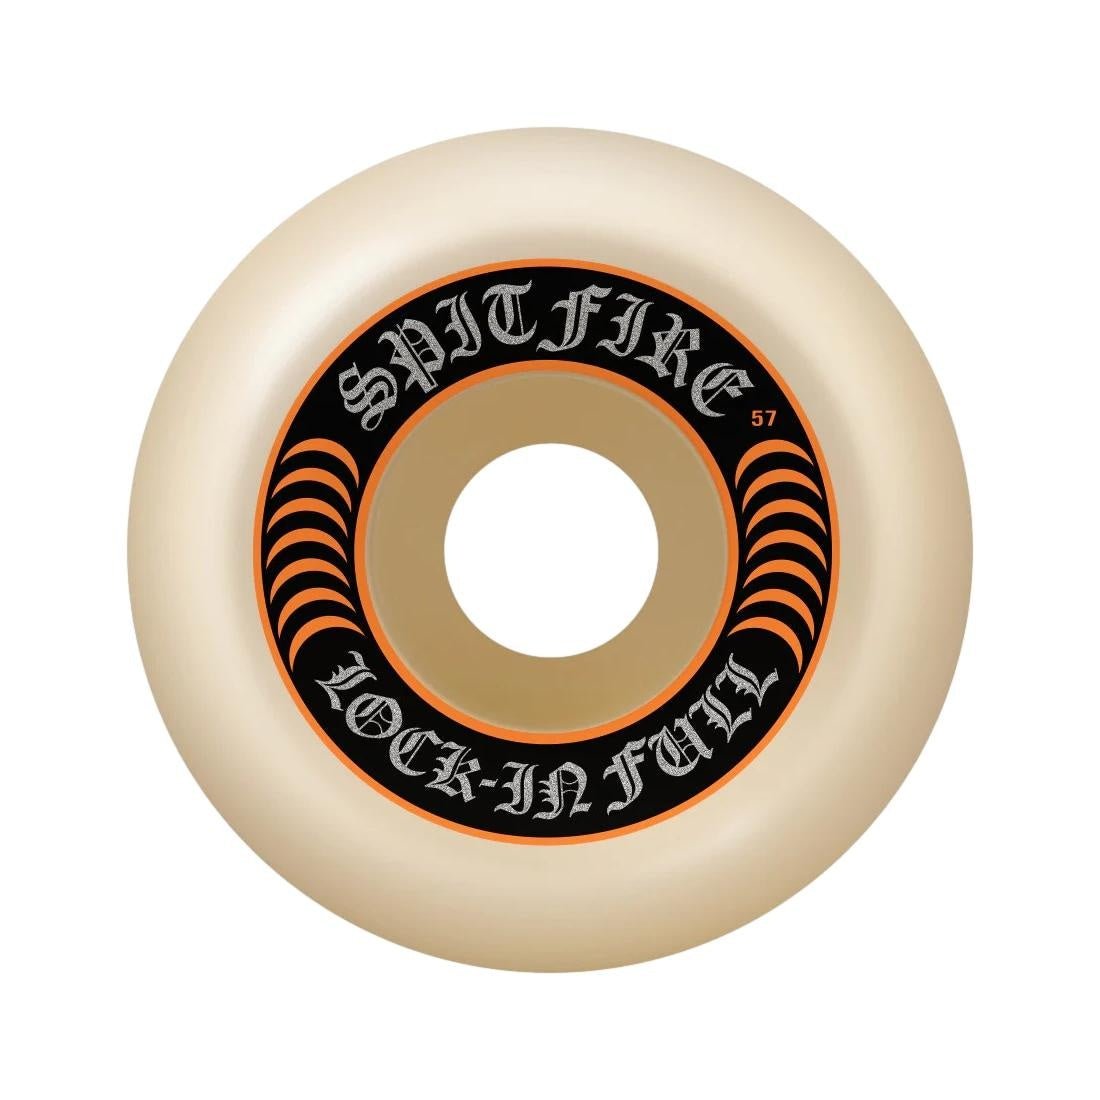 SF F4 99a Lock In Full 54mm (White/Orange) - Skateboard - Wheels